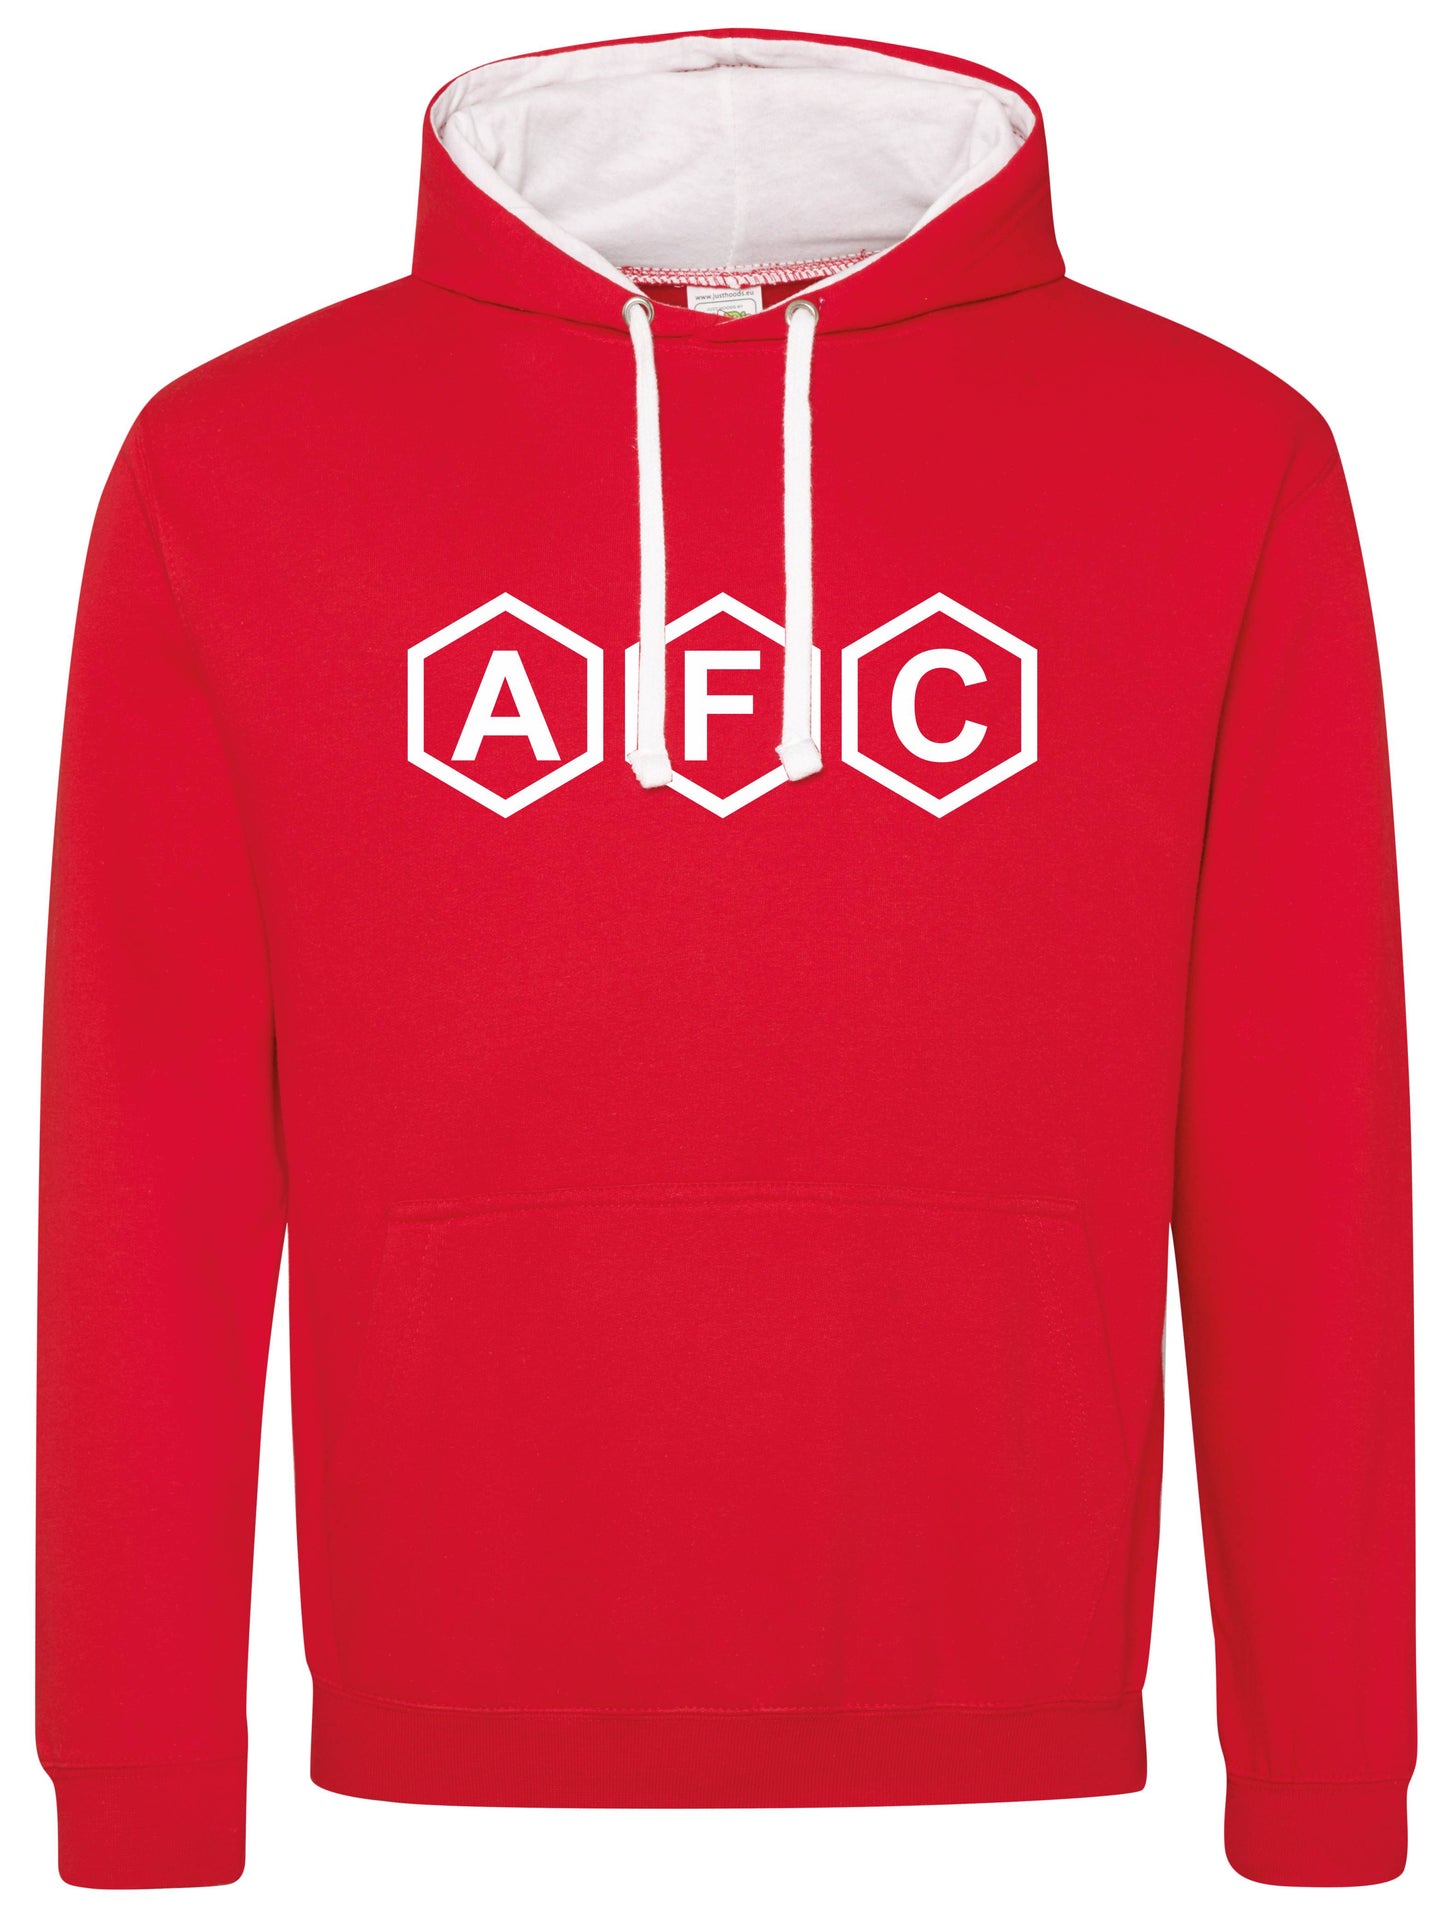 AFC Contrast Hoodies (Various Colours)